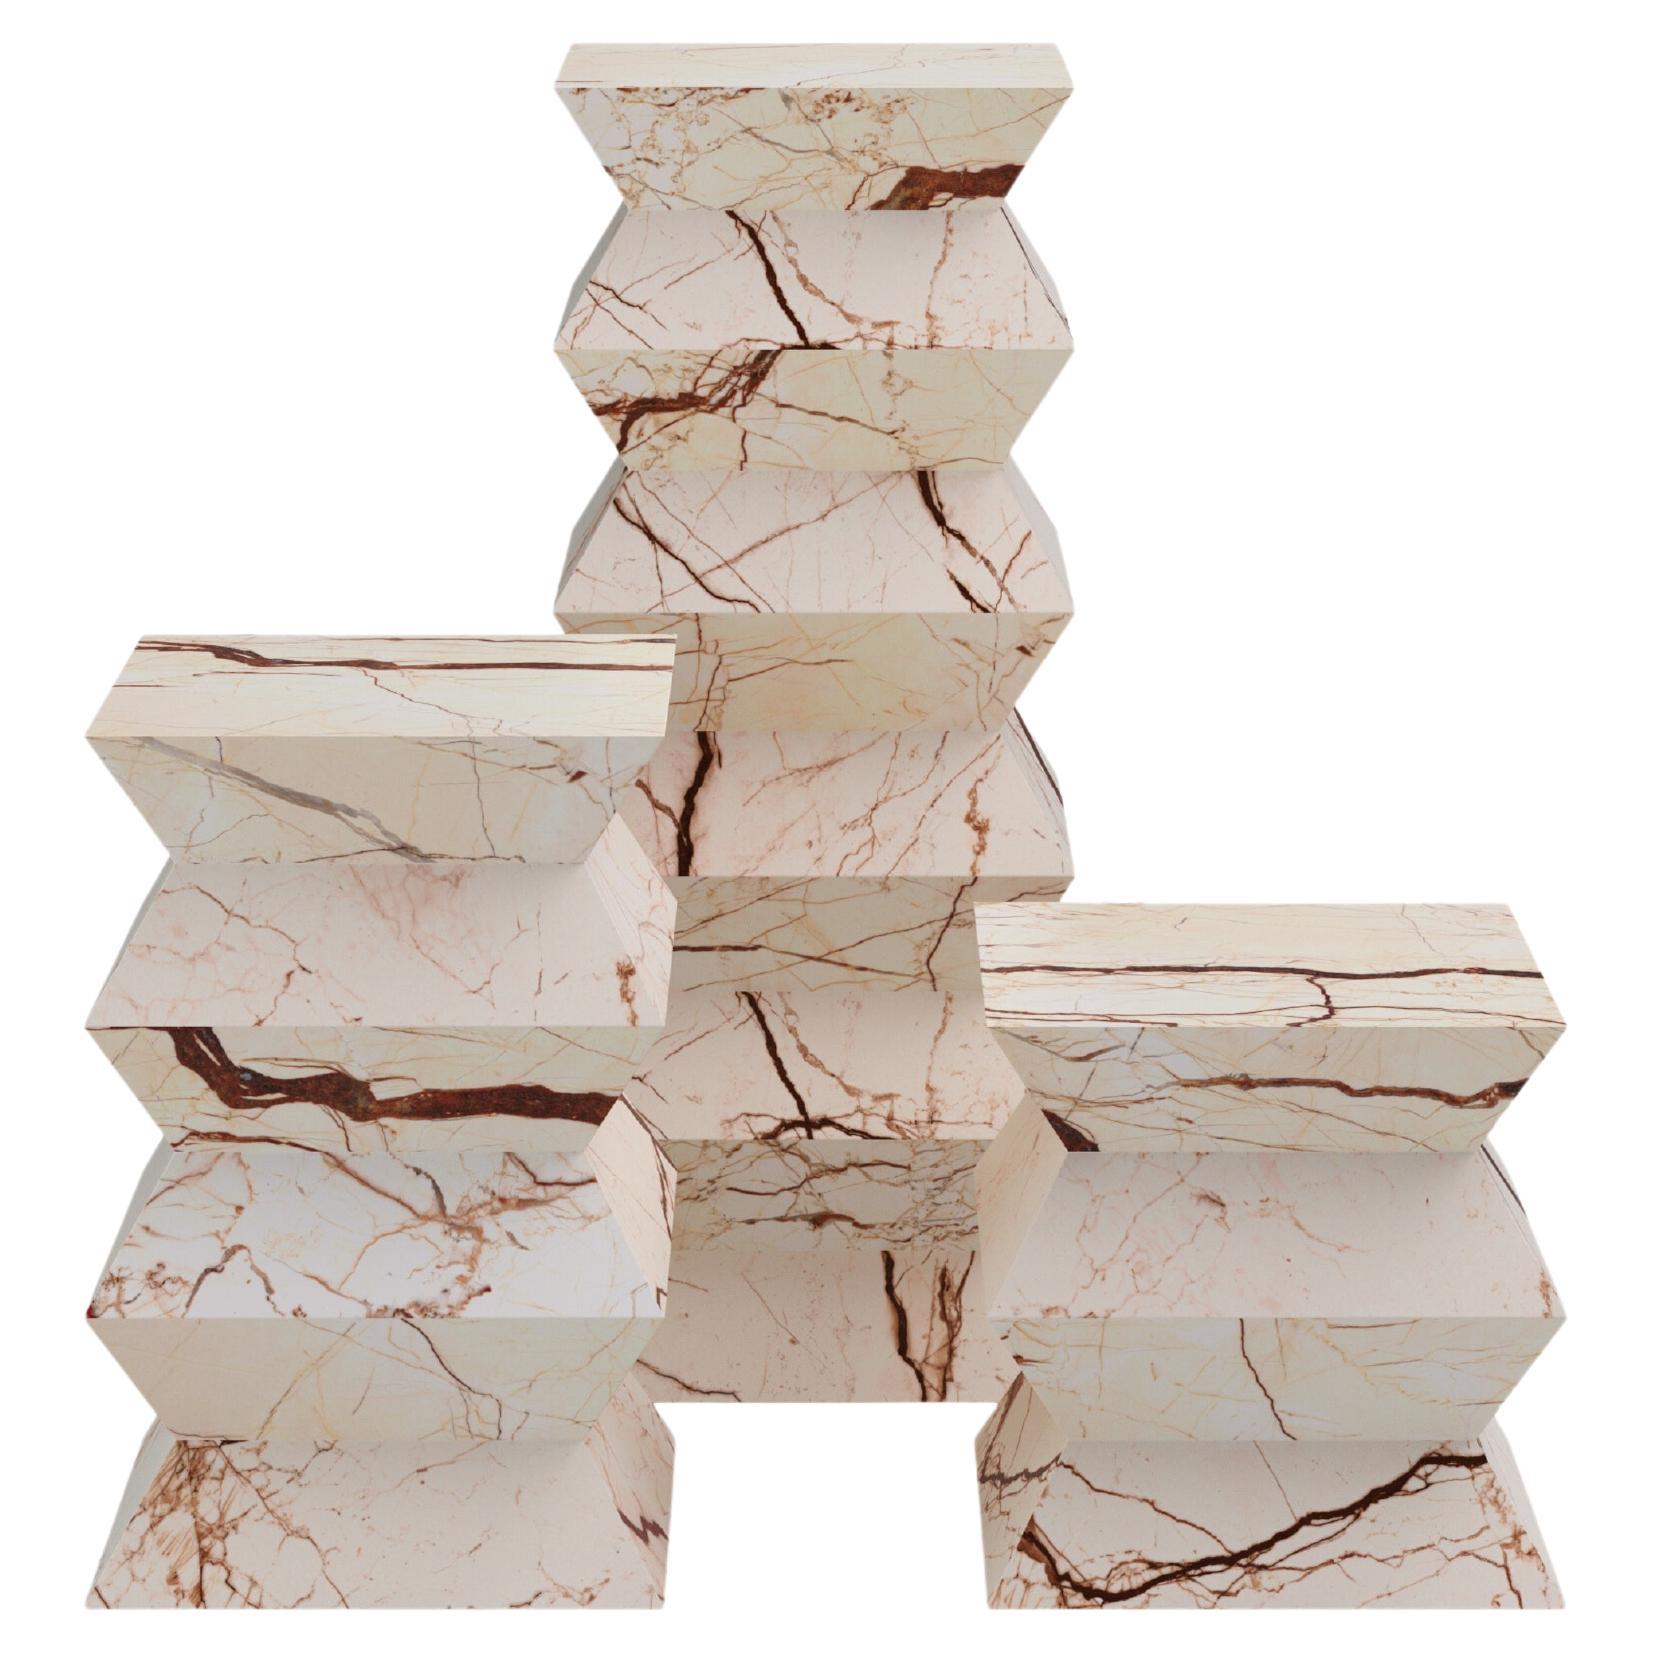 FORM(LA) Grinza Pedestal 16"L x 16"W x 24"H Sofita marbre beige